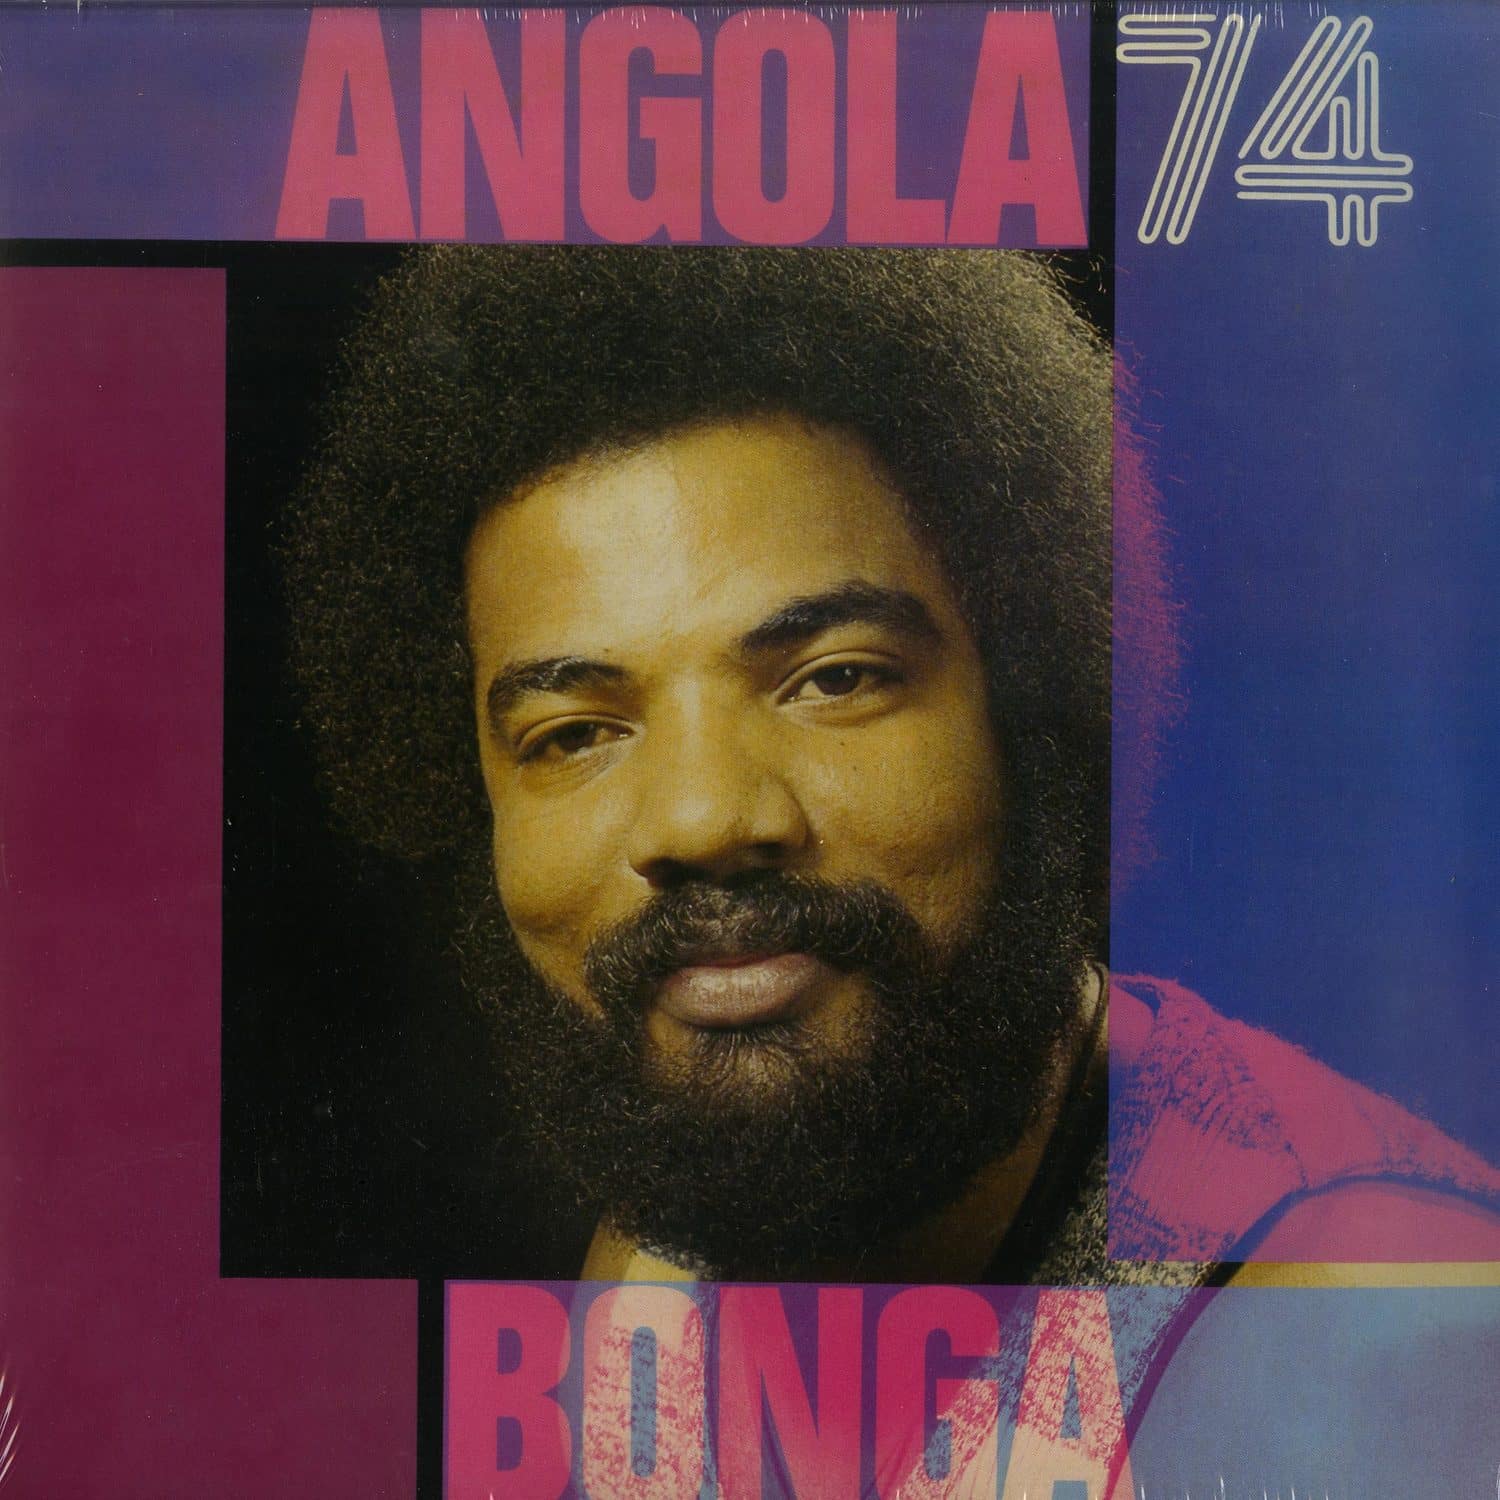 Bonga - ANGOLA 74 